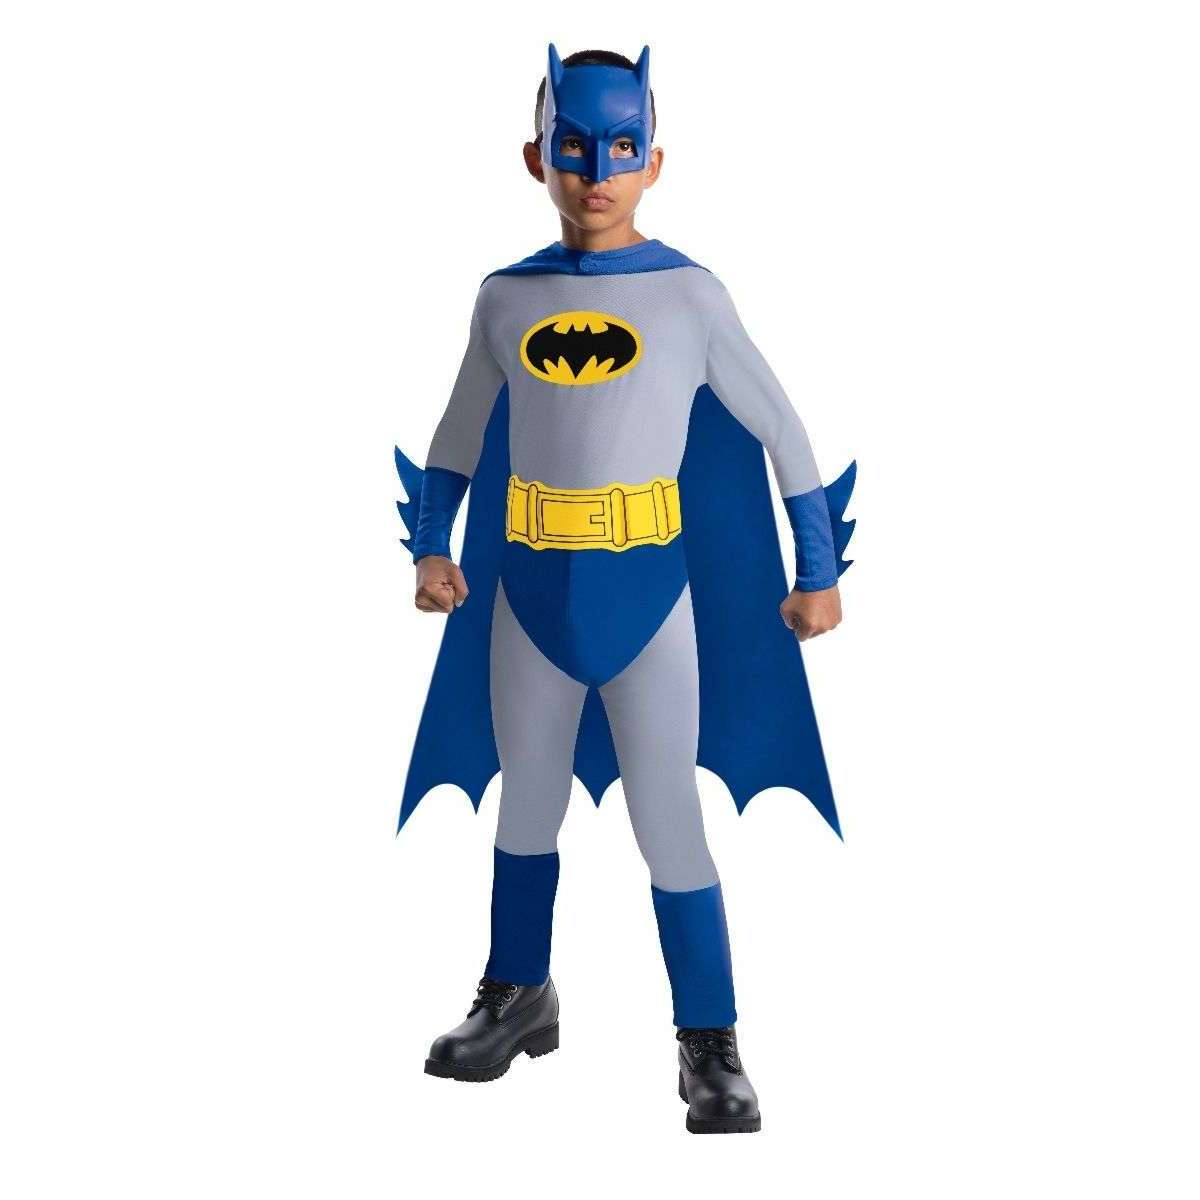 Classic Blue and Gray Batman Large Child Costume